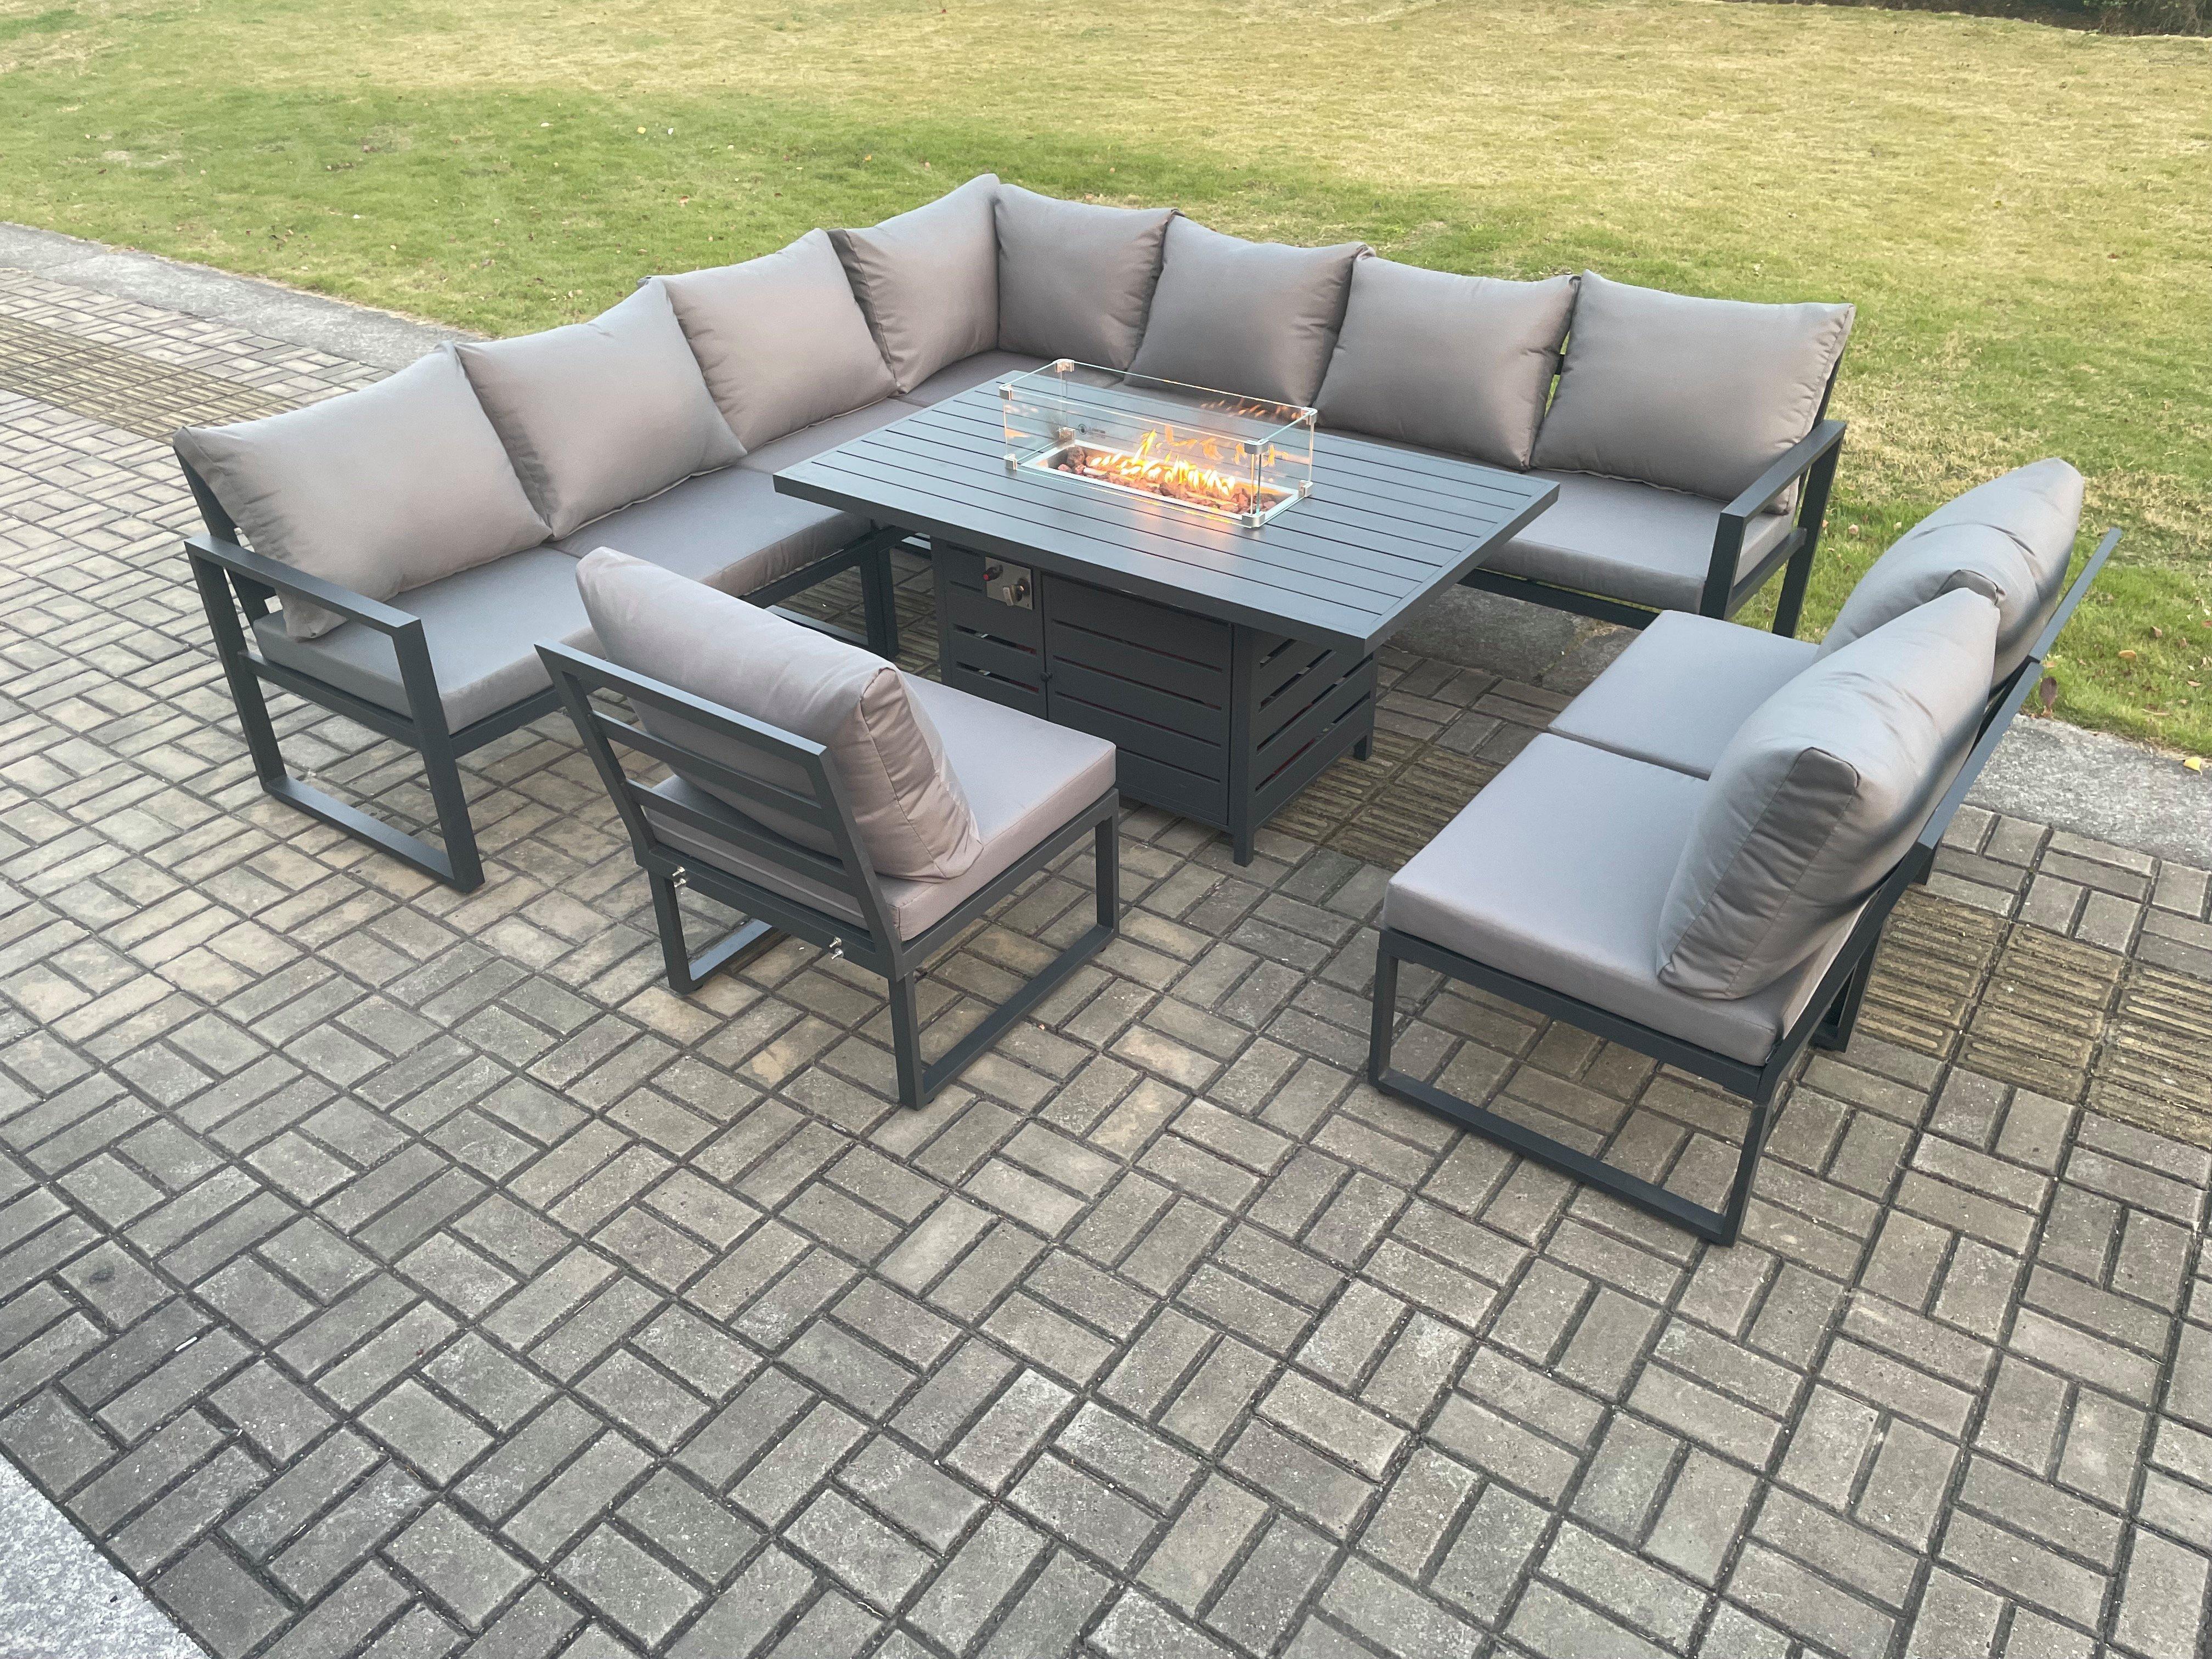 Aluminium 10 Seater Lounge Corner Sofa Outdoor Garden Furniture Sets Gas Fire Pit Dining Table Set D